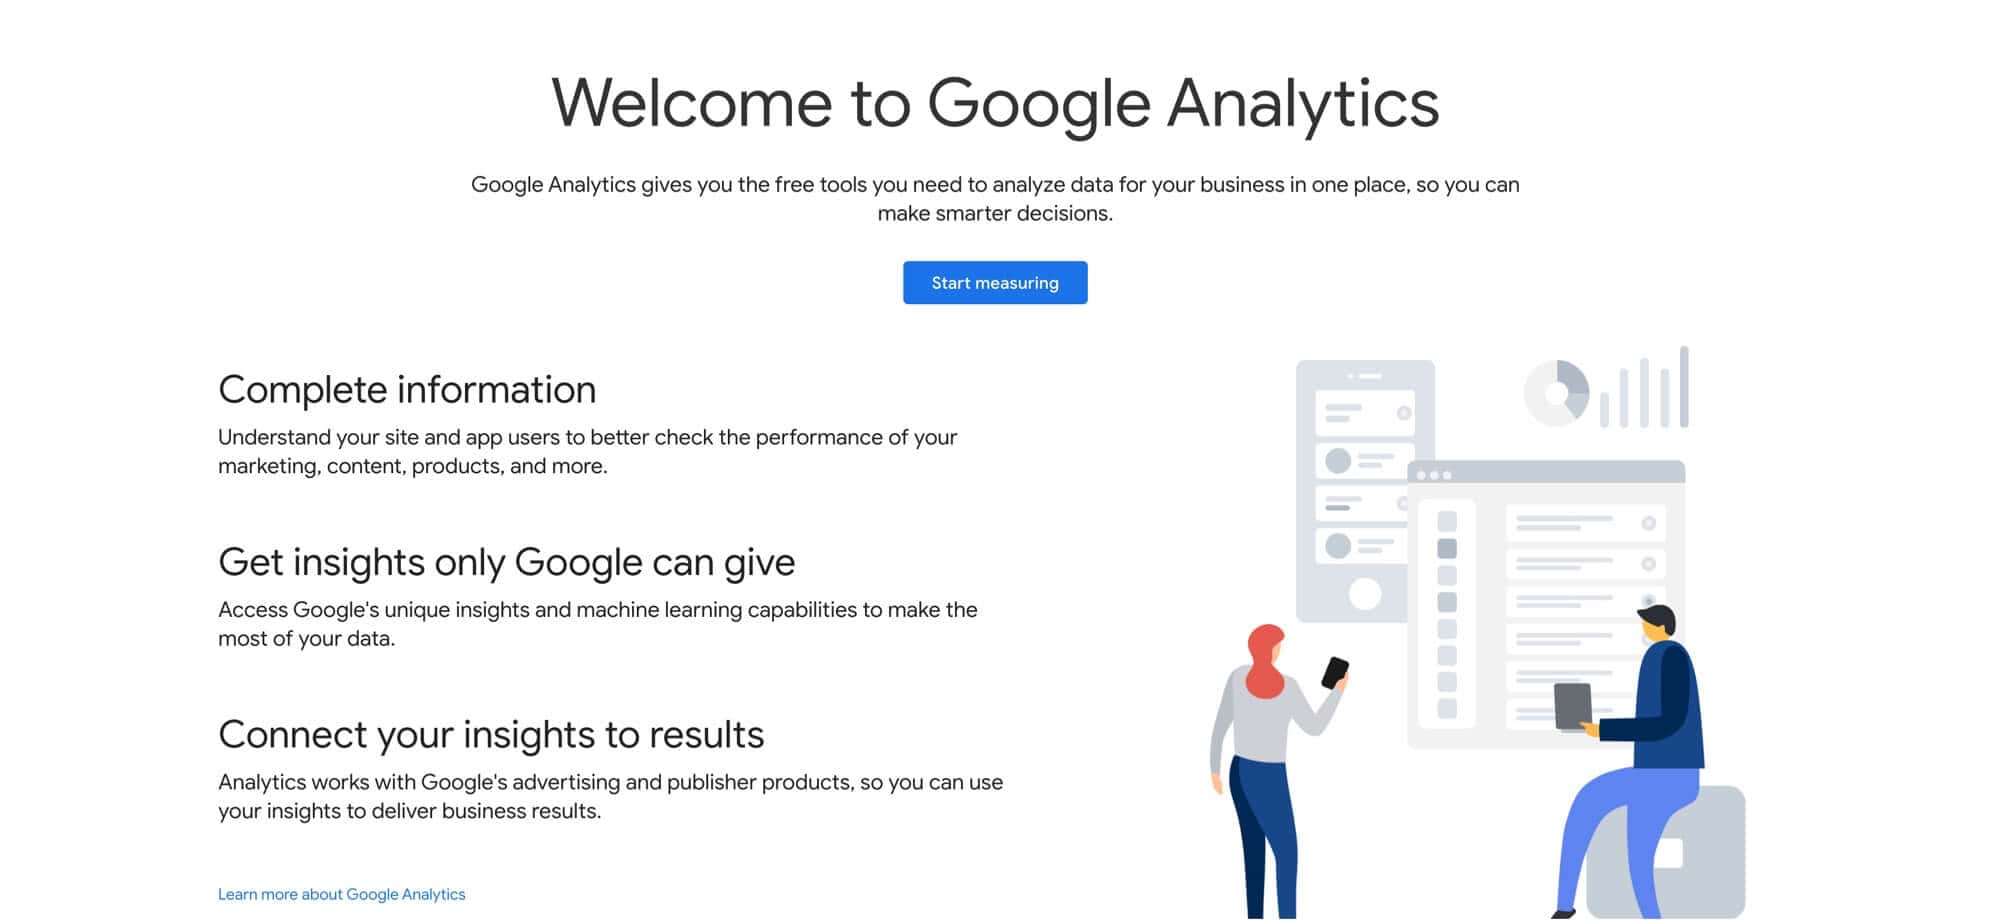 Welcome to Google Analytics